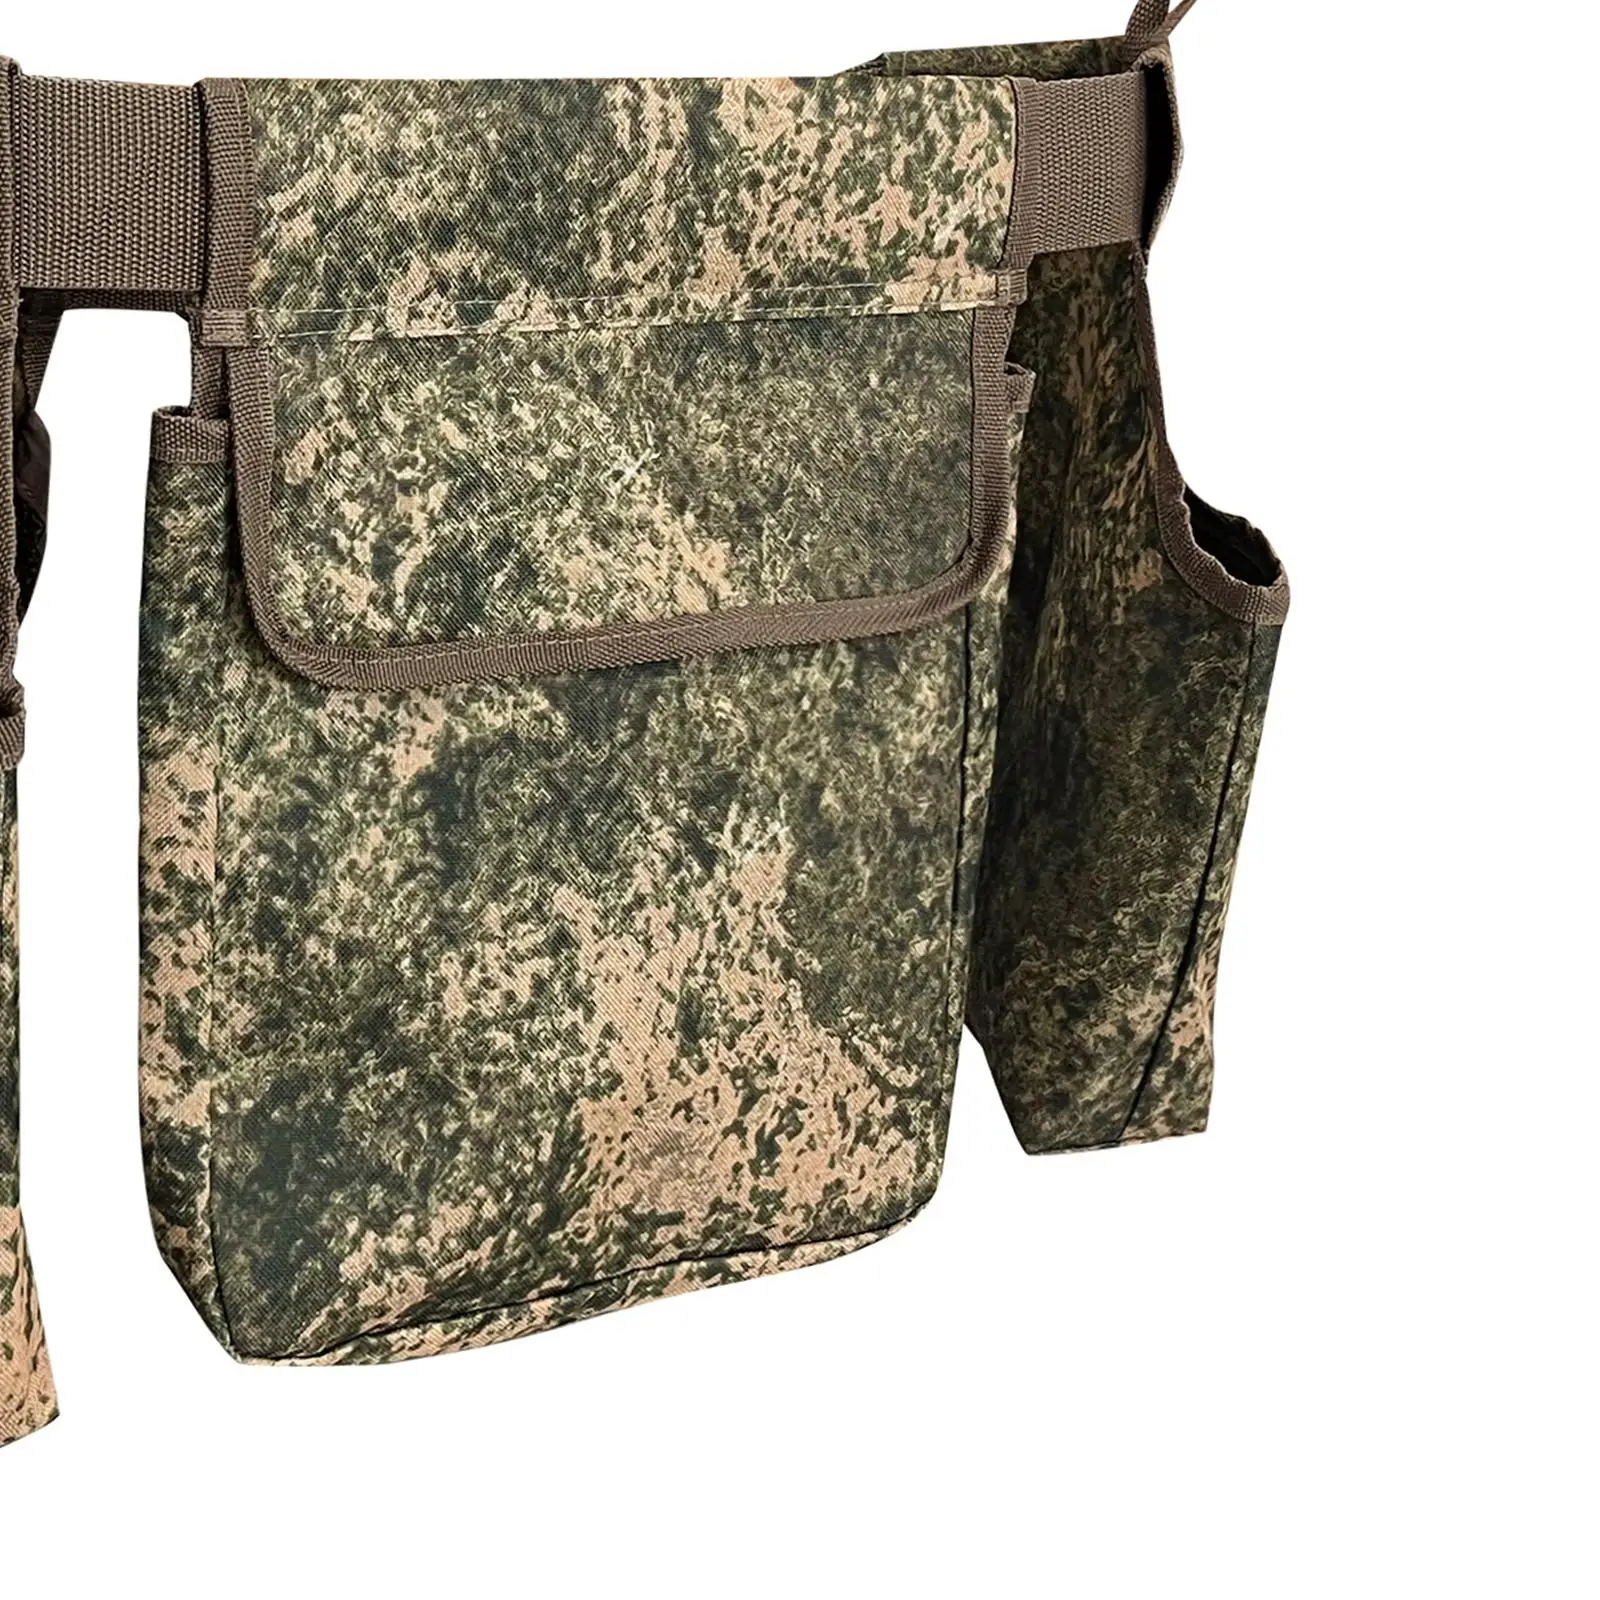 Waist Bag Scratch Resistant Outdoor Belt Bag for Camping Hiking Sports